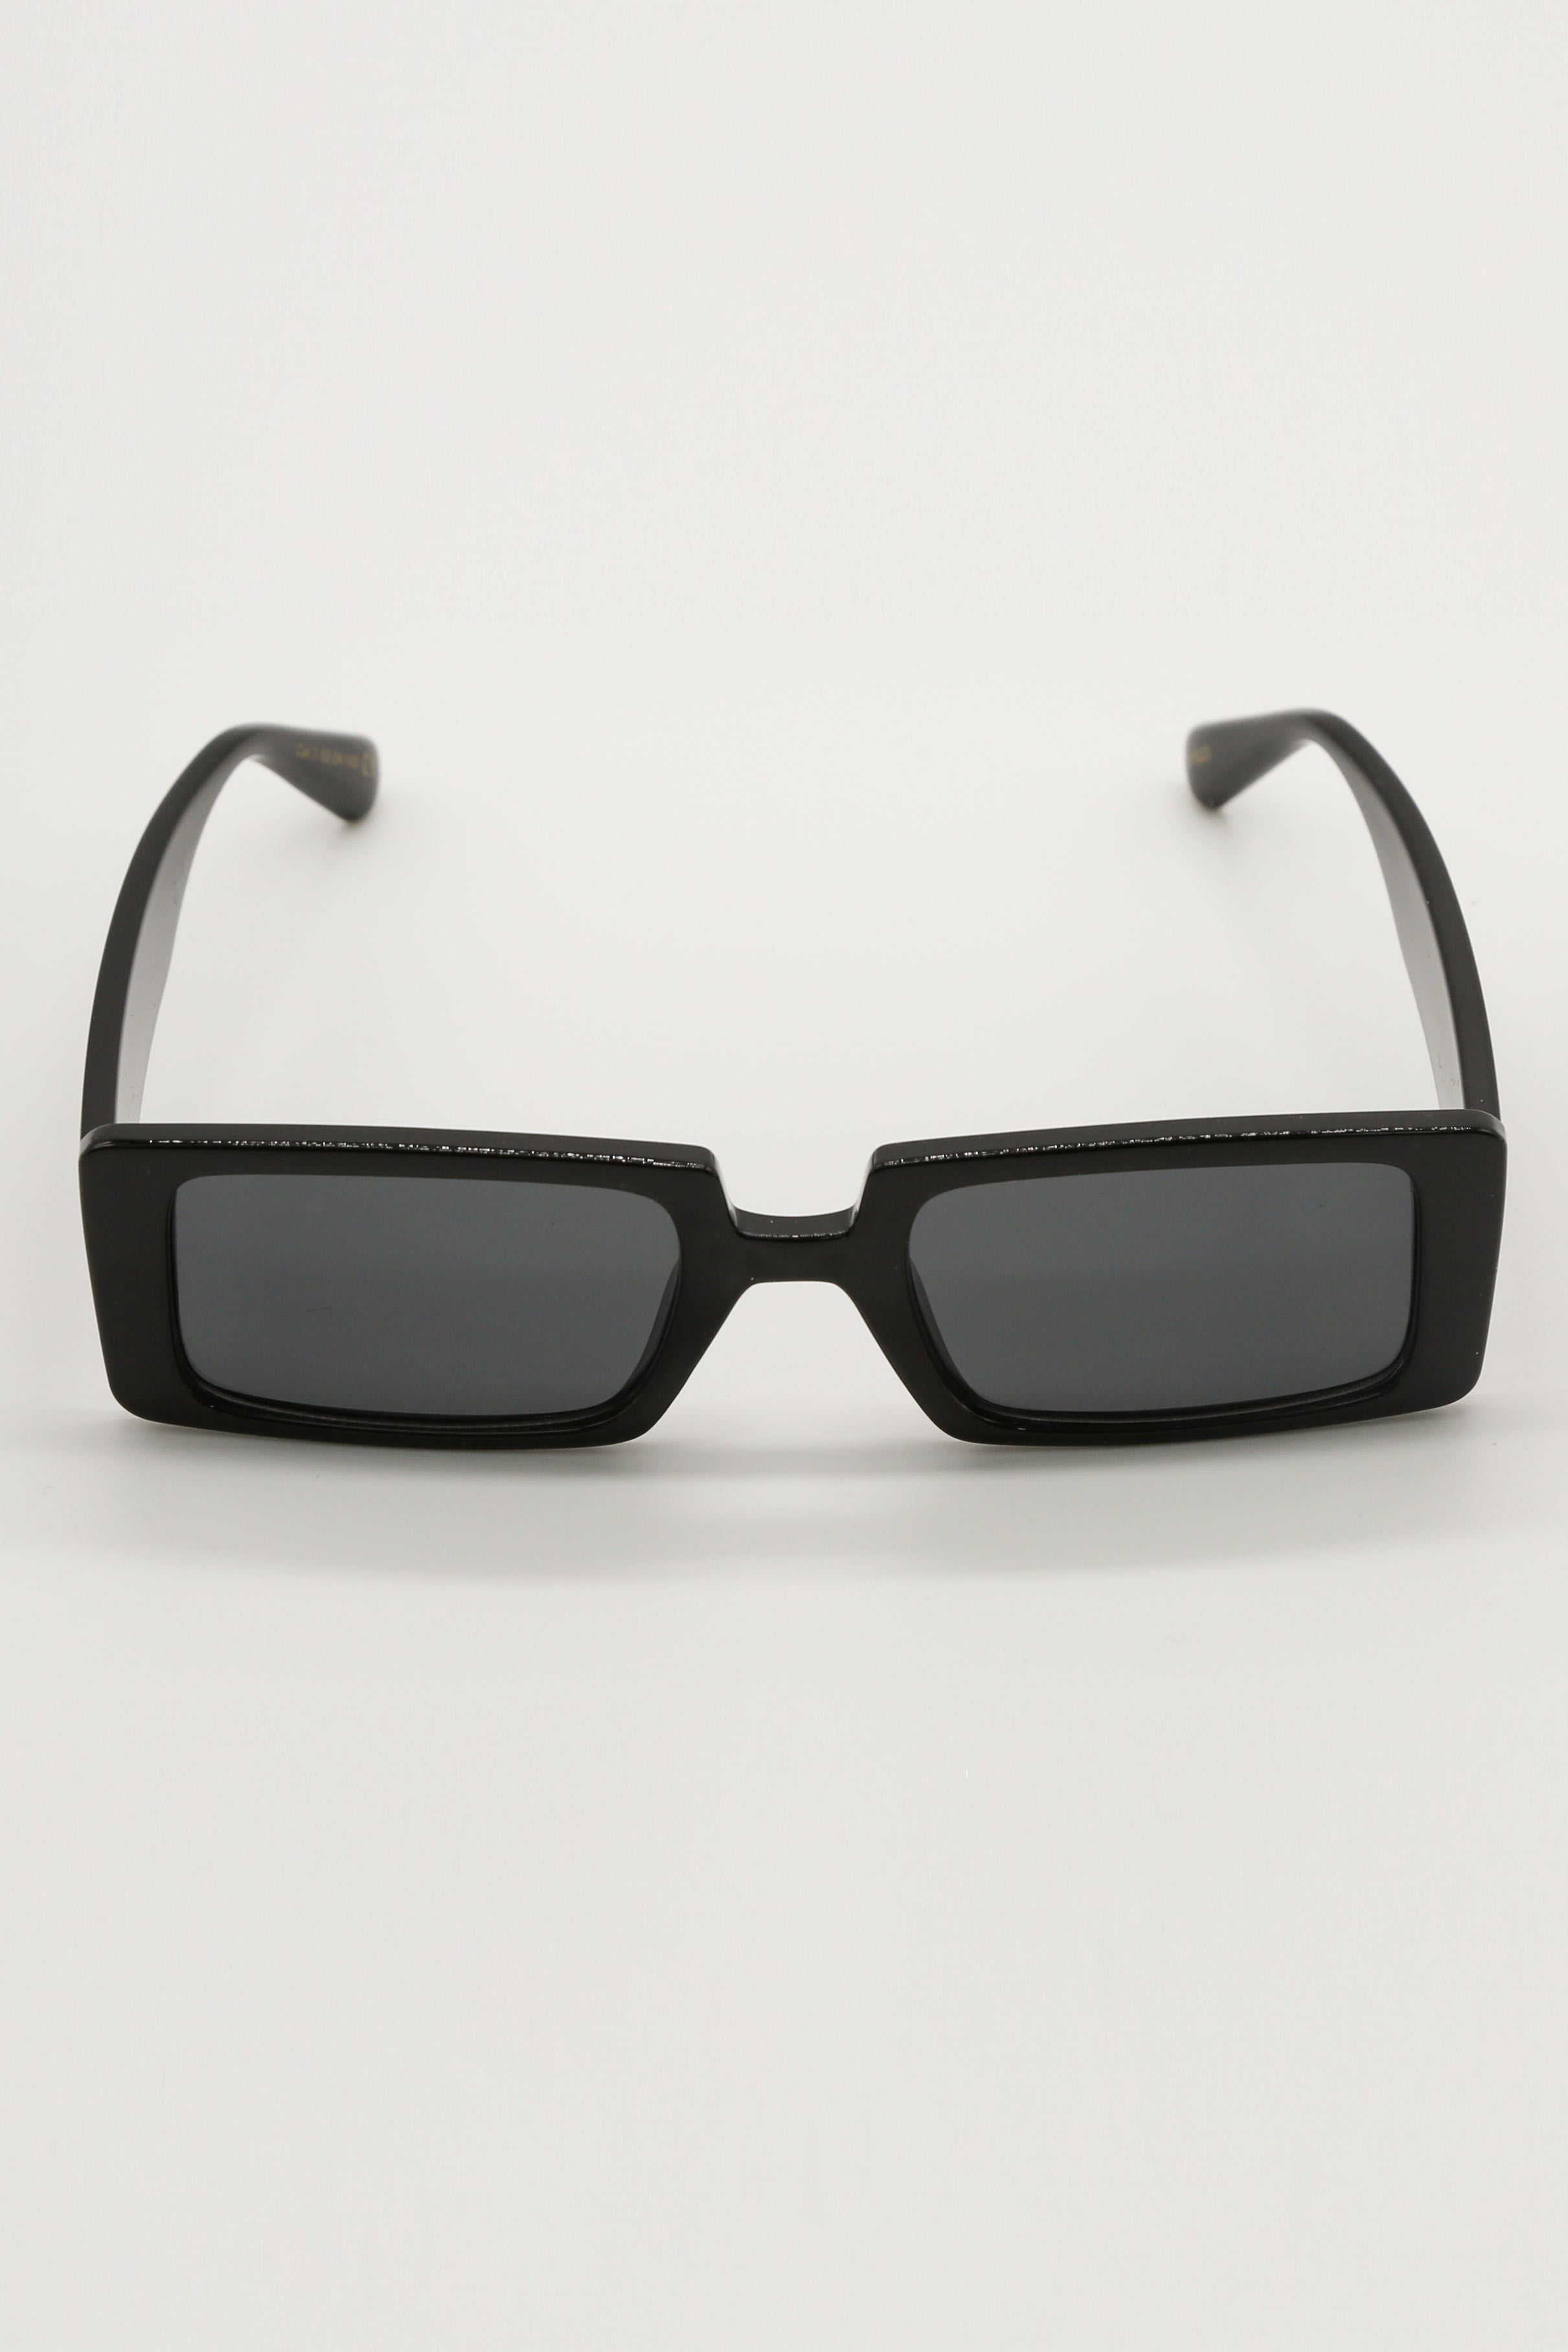 Black Slimline Square frame Sunglasses